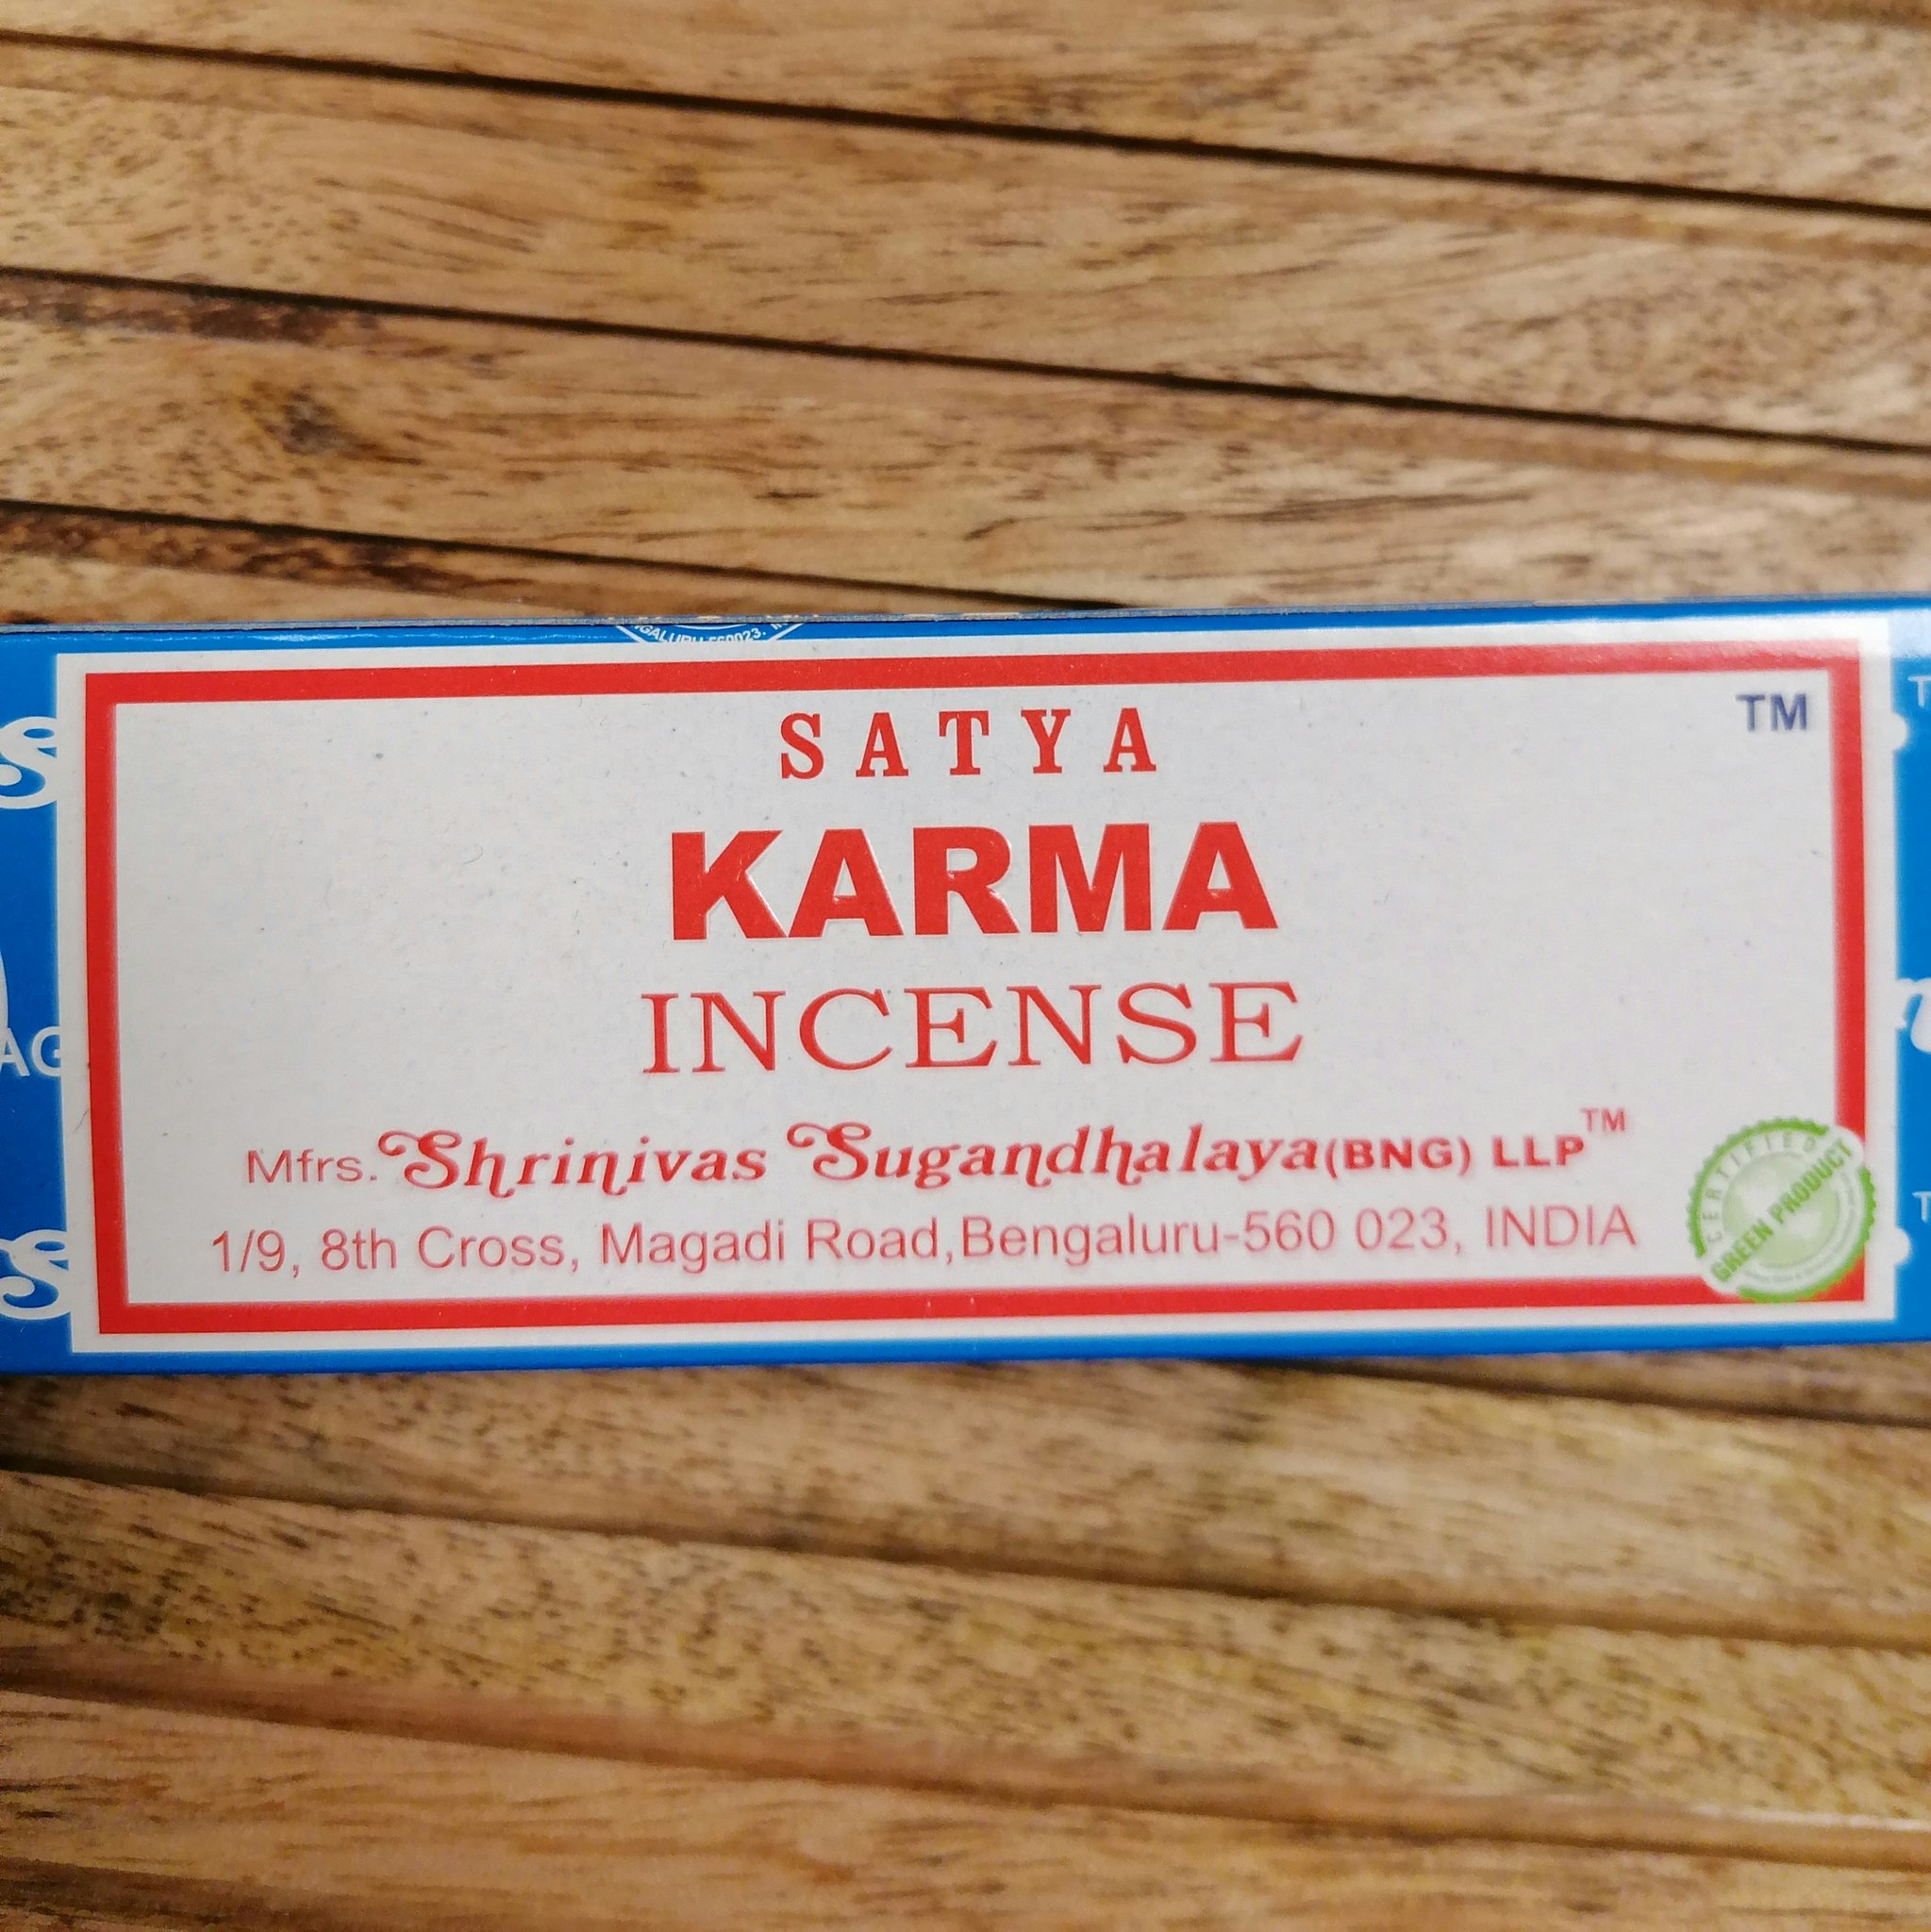 Satya Incense Karma